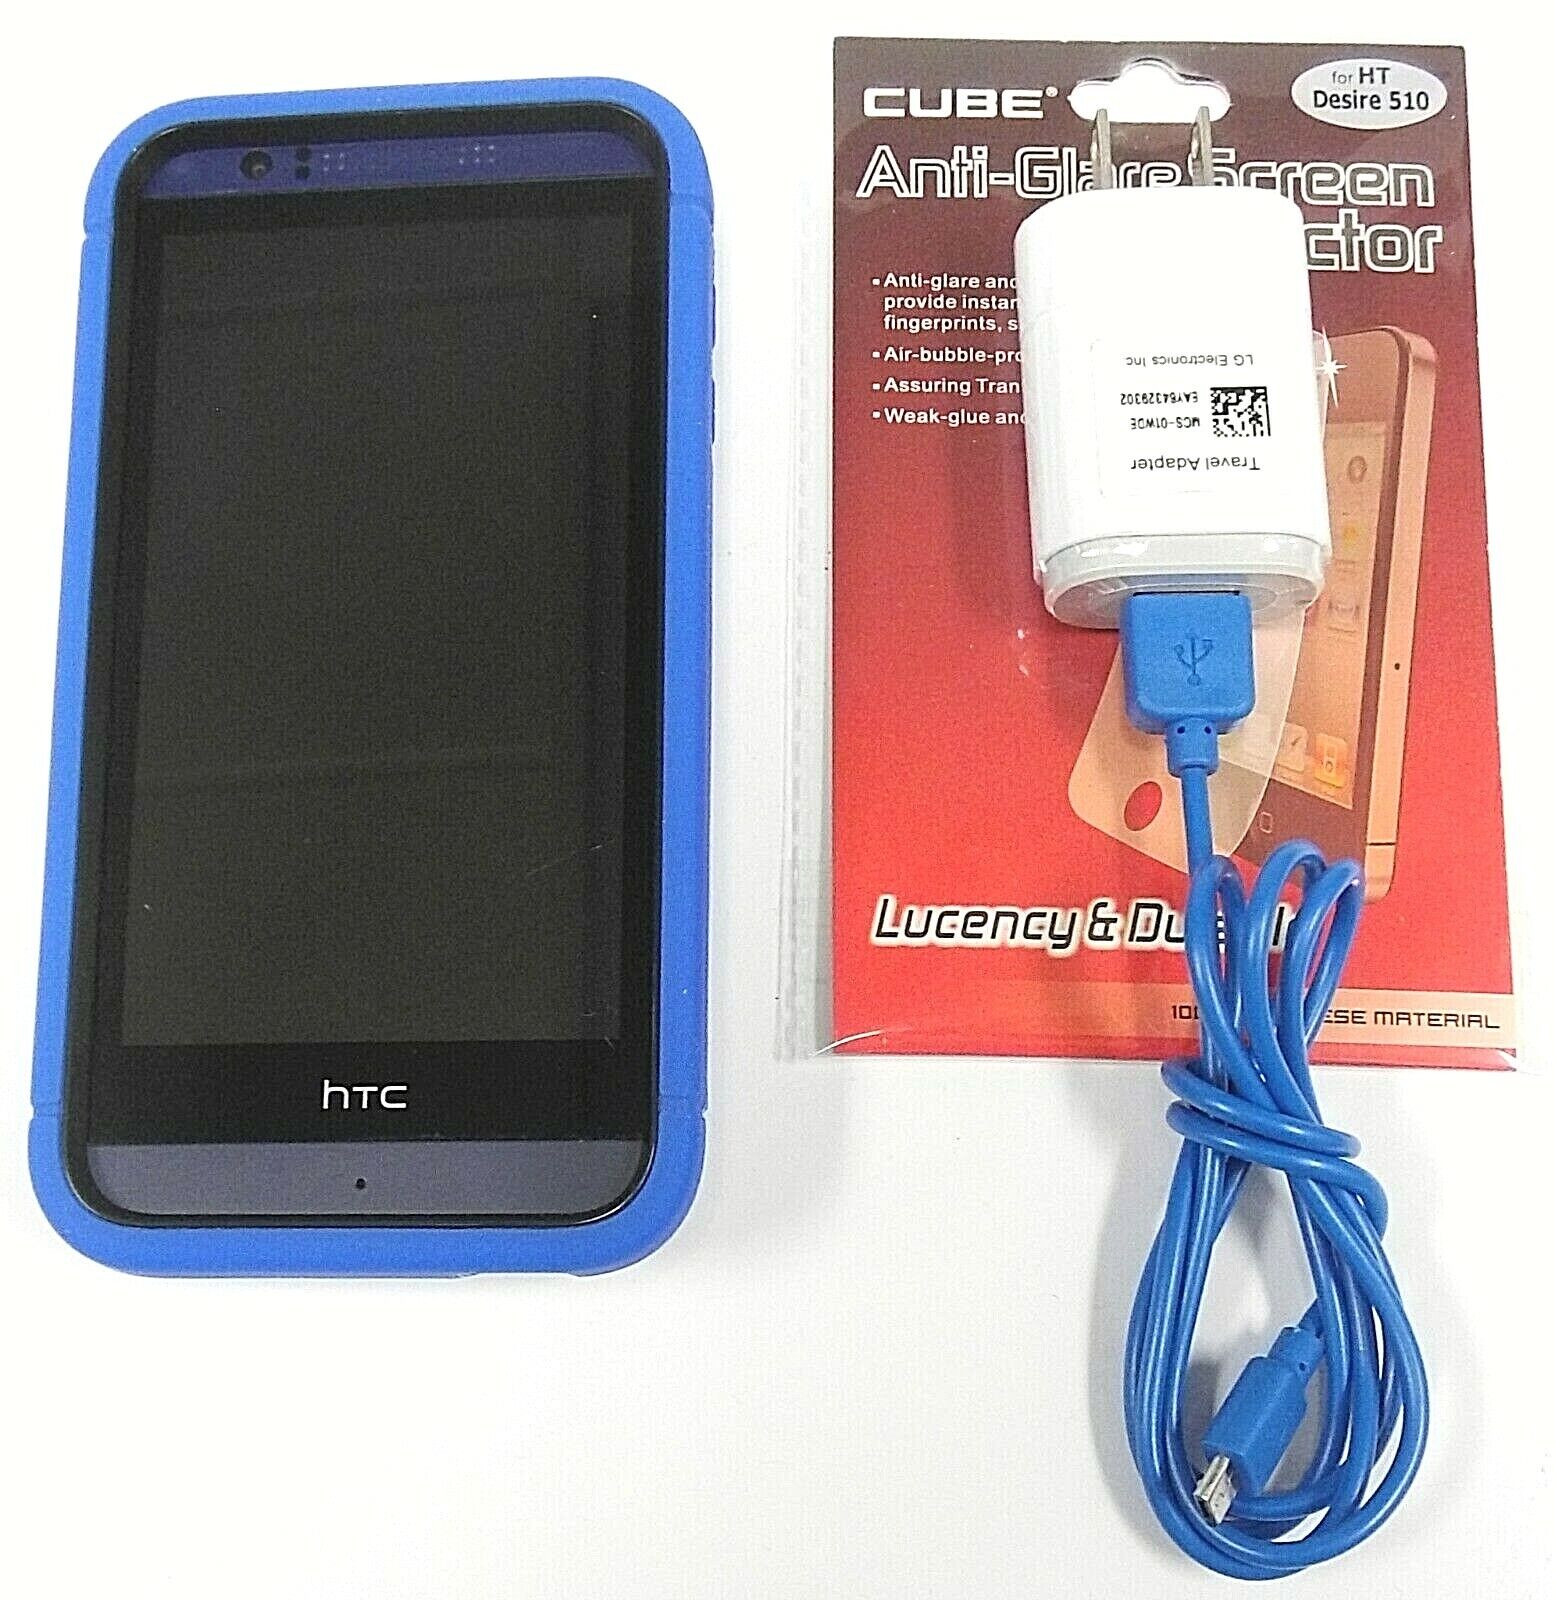 HTC Desire 510 - Deep Navy Blue ( Sprint ) Android Smartphone - Bundled HTC HTC Desire 510